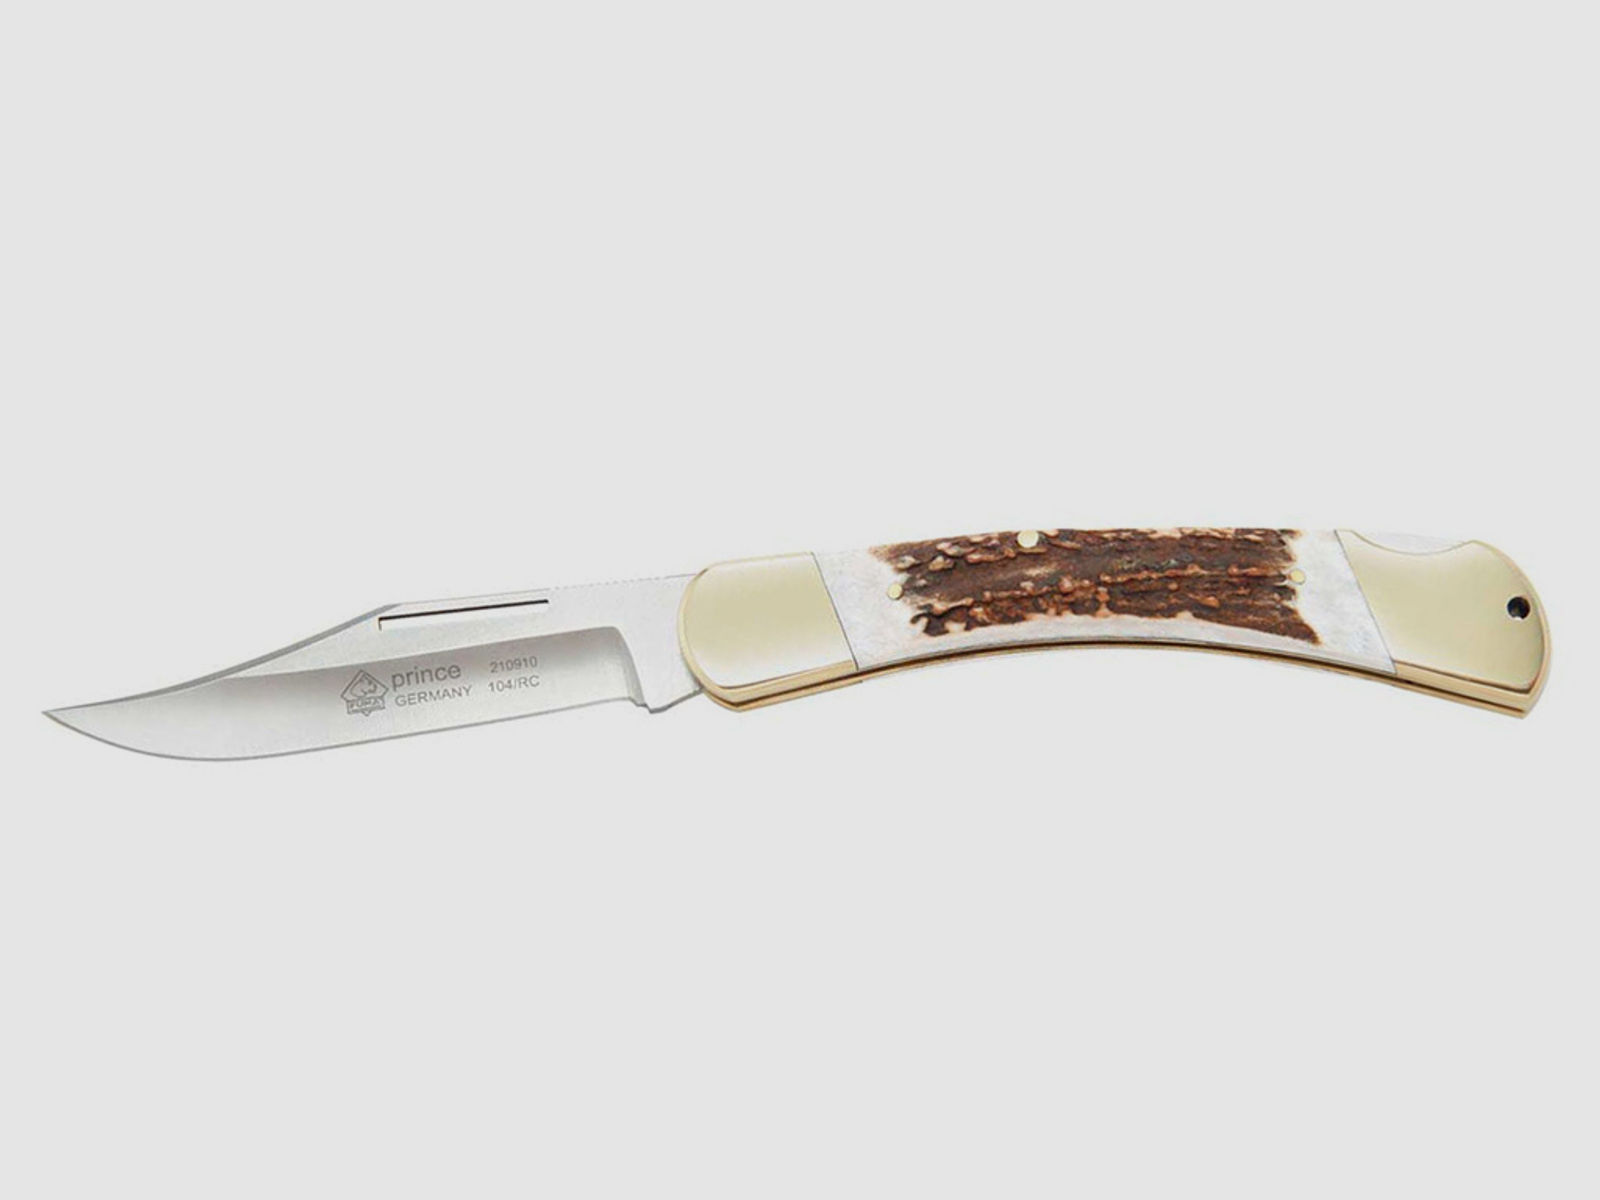 Taschenmesser Puma Prince Stahl 1.4110 KlingenlĂ¤nge 9 cm Hirschhorngriff Messingbacken (P18)